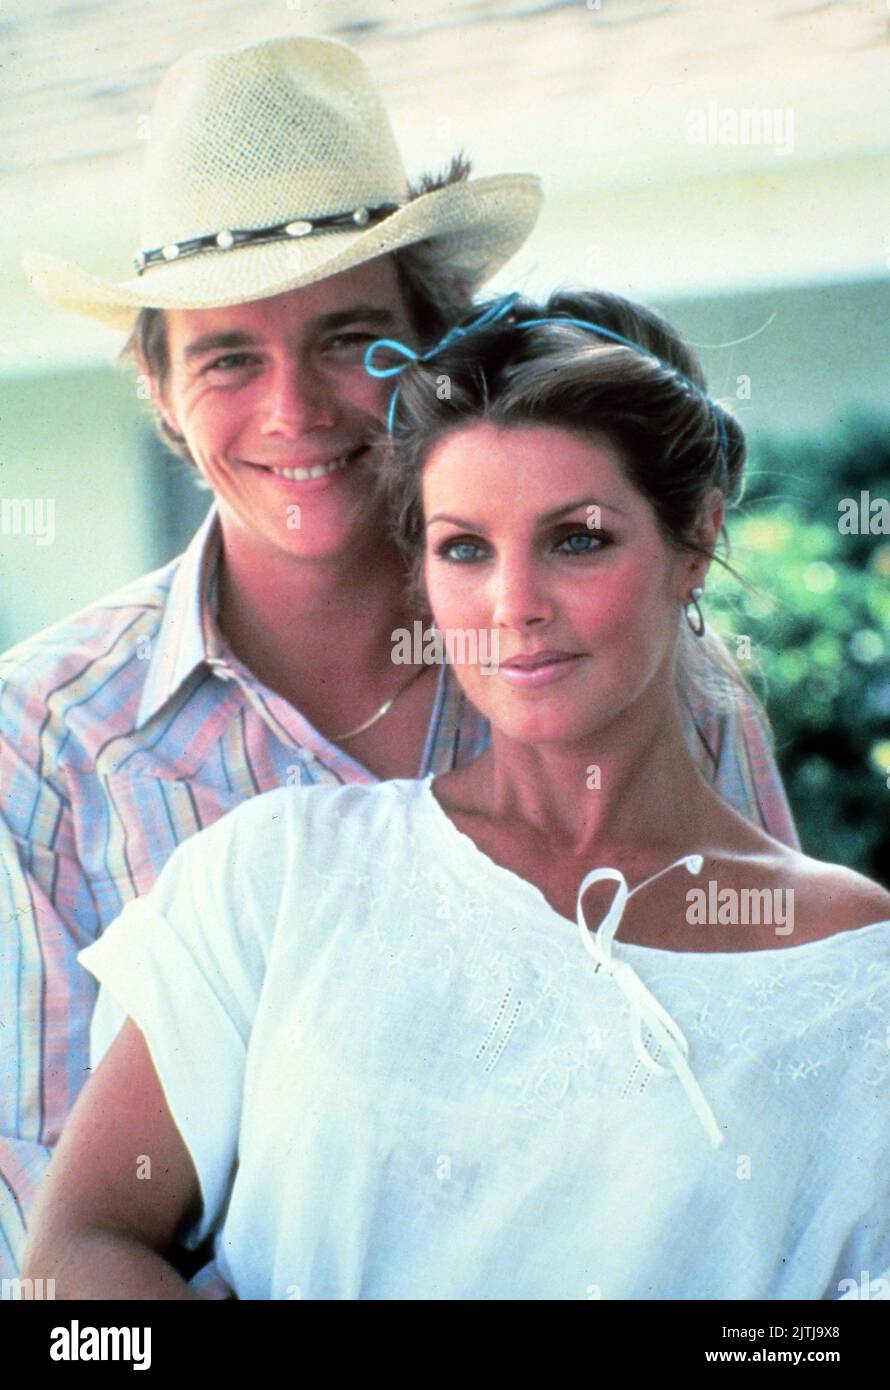 Dallas, Fernsehserie, EE.UU. 1978 - 1991, Darsteller: Priscilla Beaulieu Presley Foto de stock